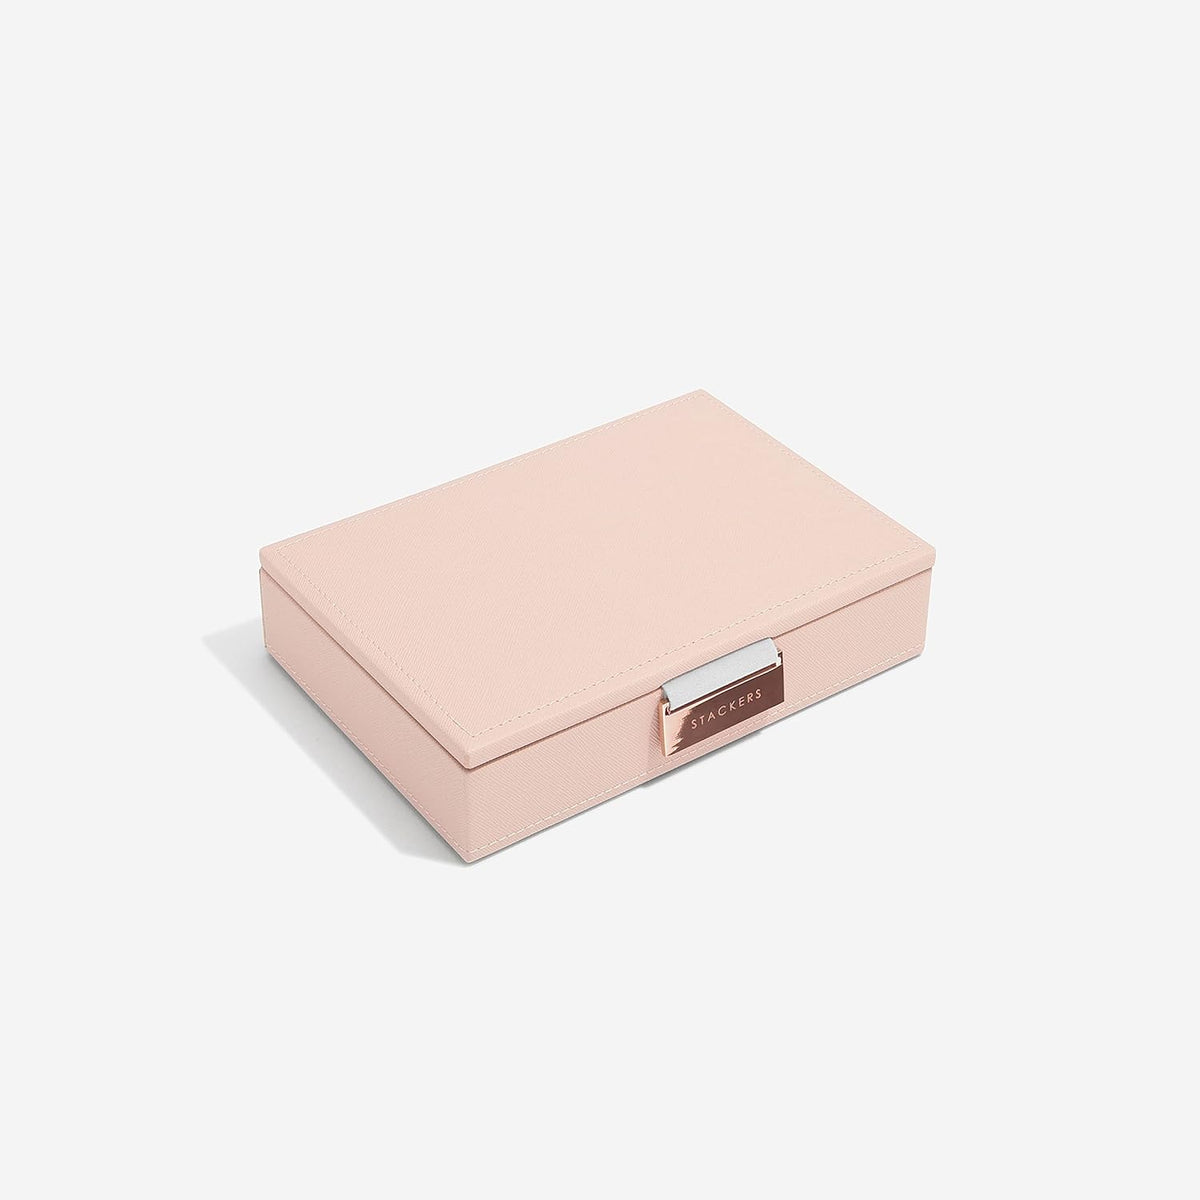 Stackers Blush Pink Mini Jewellery Box Lid